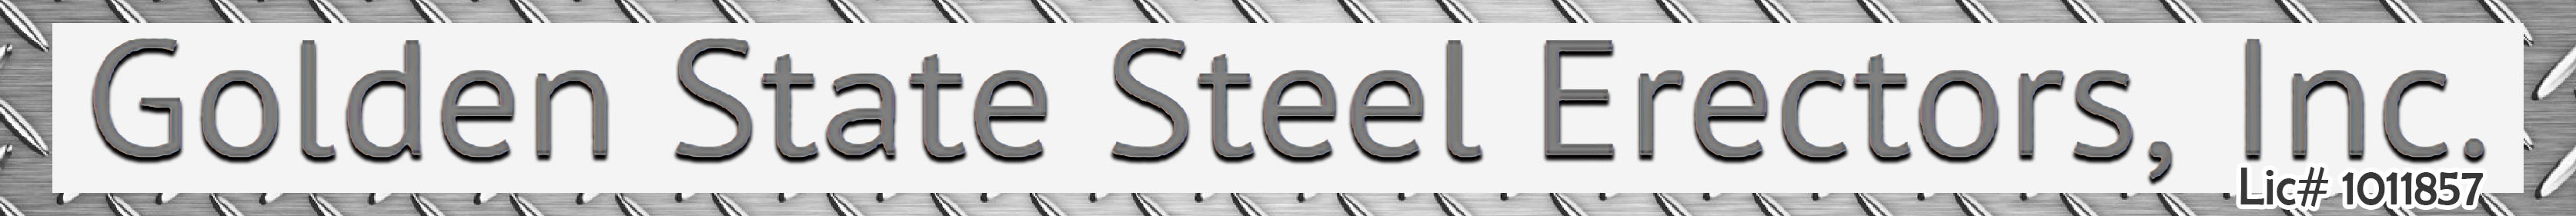 Bakersfield Steel Erectors Commerical and Industrial